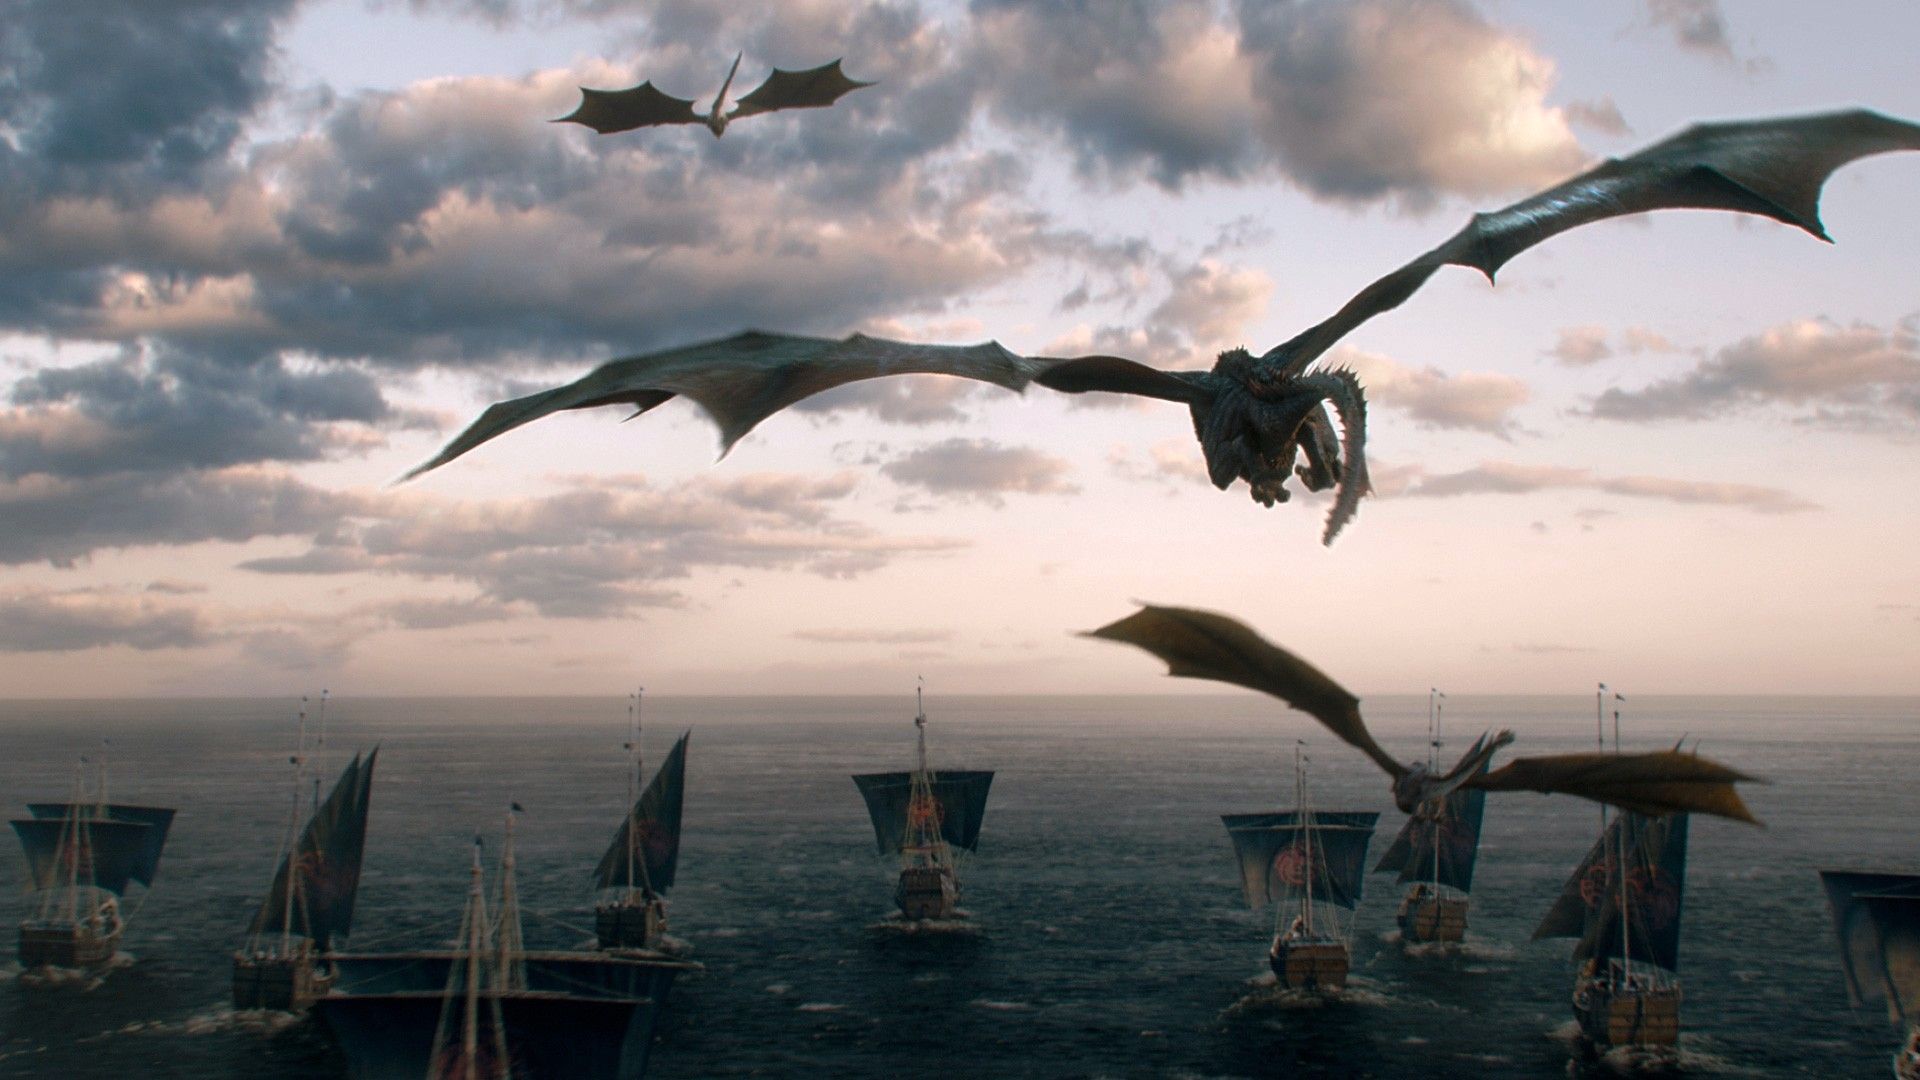 Game of Thrones Dragons Wallpaper For Desktop Movie Poster